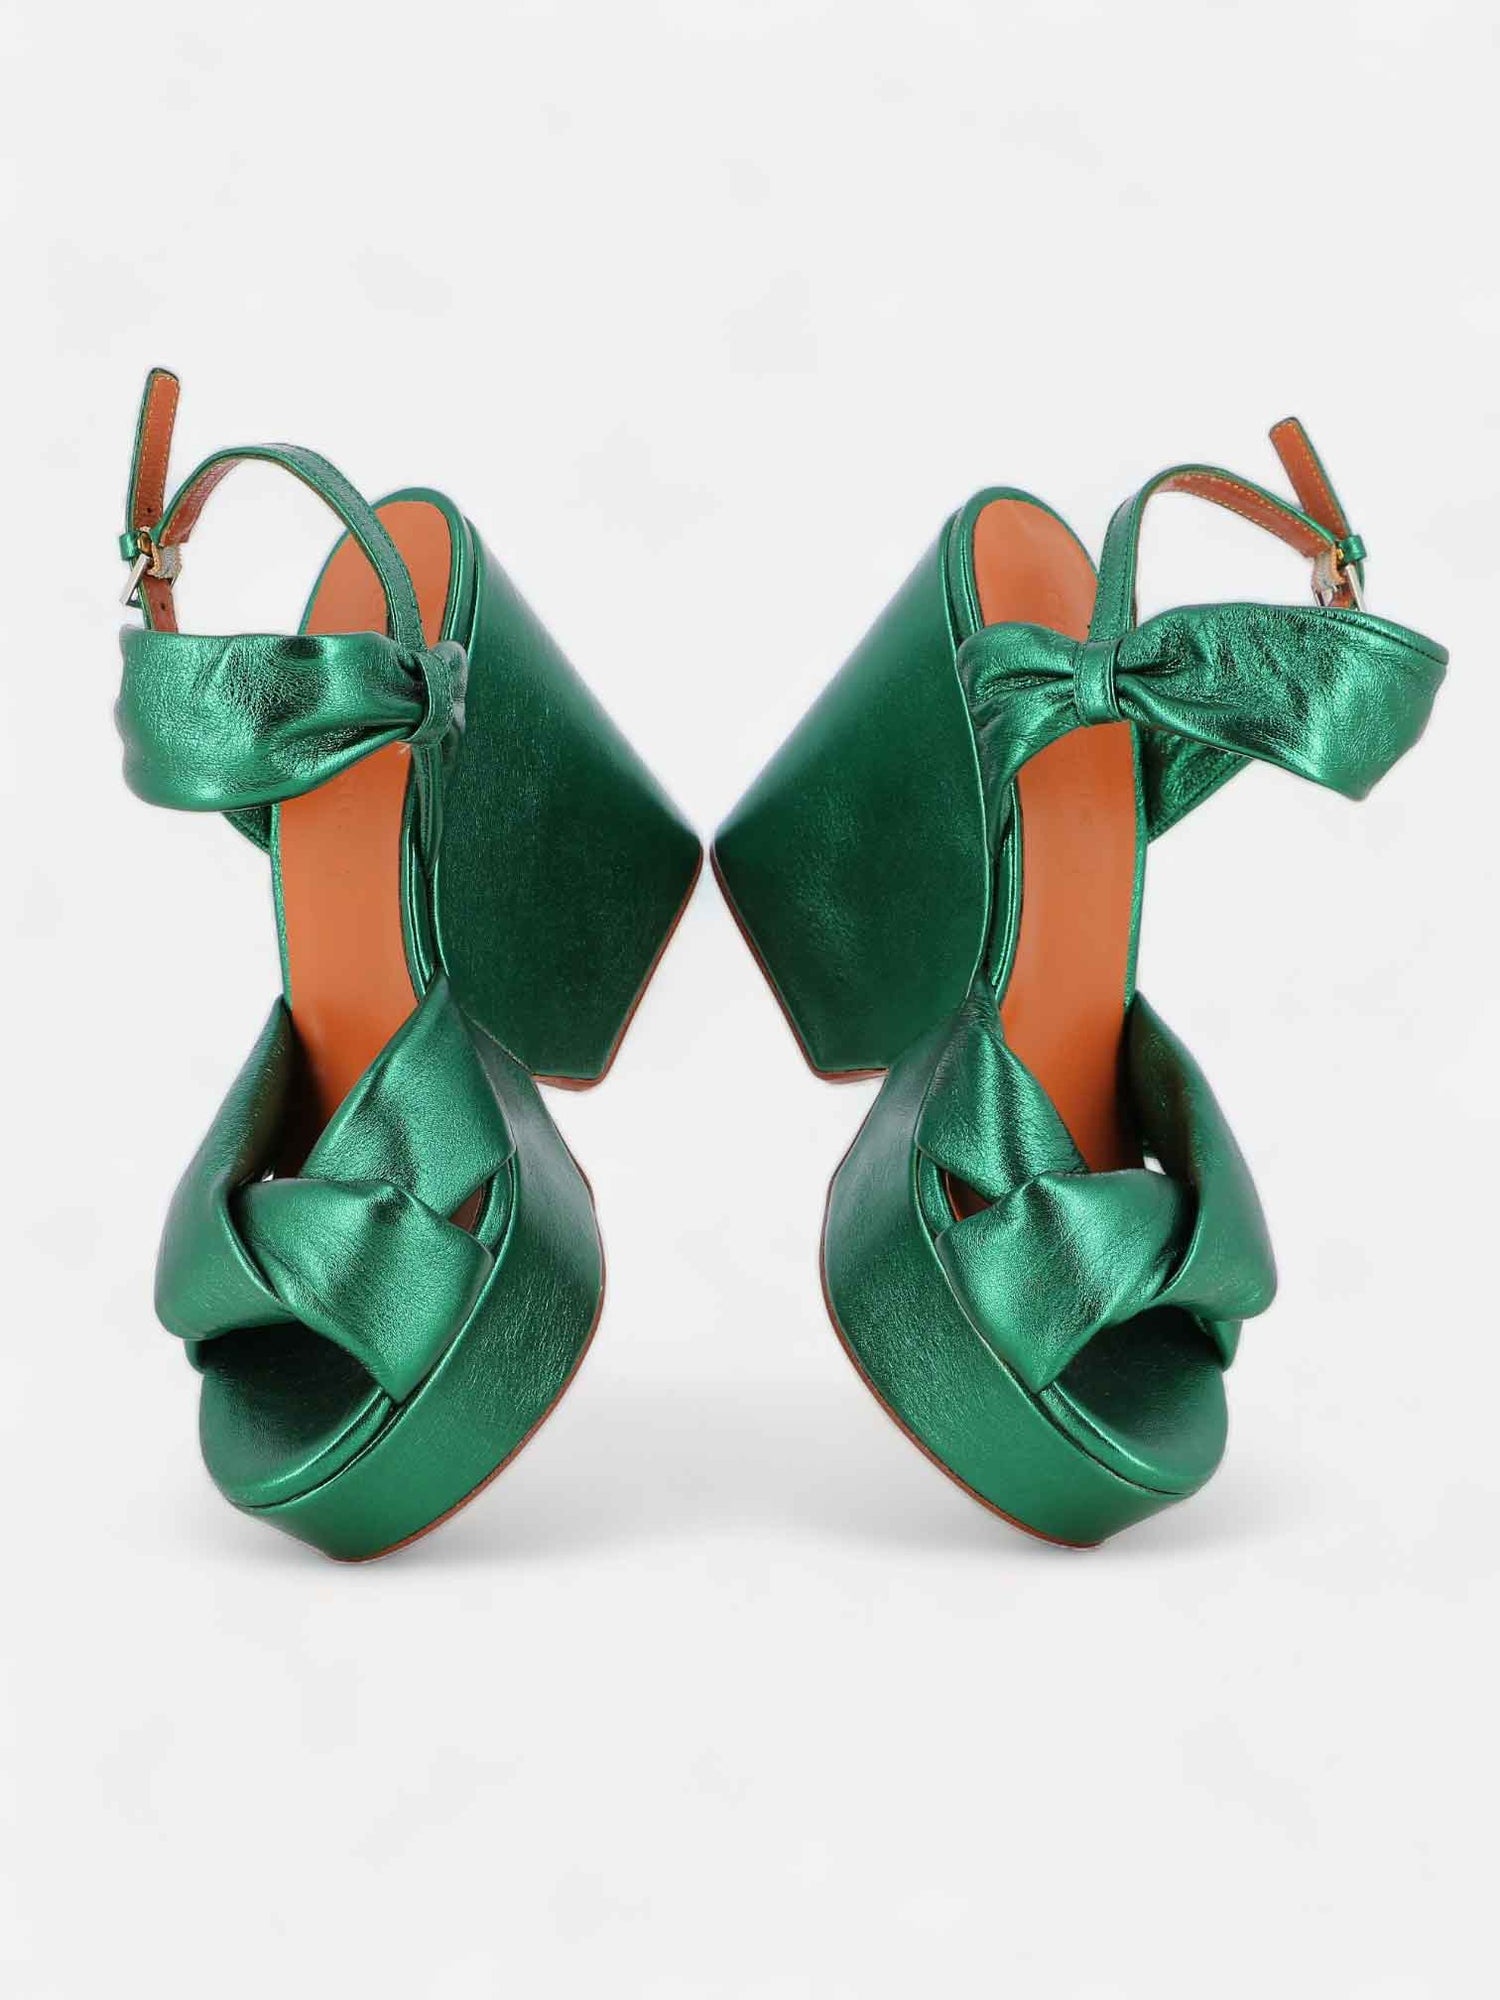 SANDALS - DARLIE sandals, lambskin green metallic - 3606063895897 - Clergerie Paris - Europe